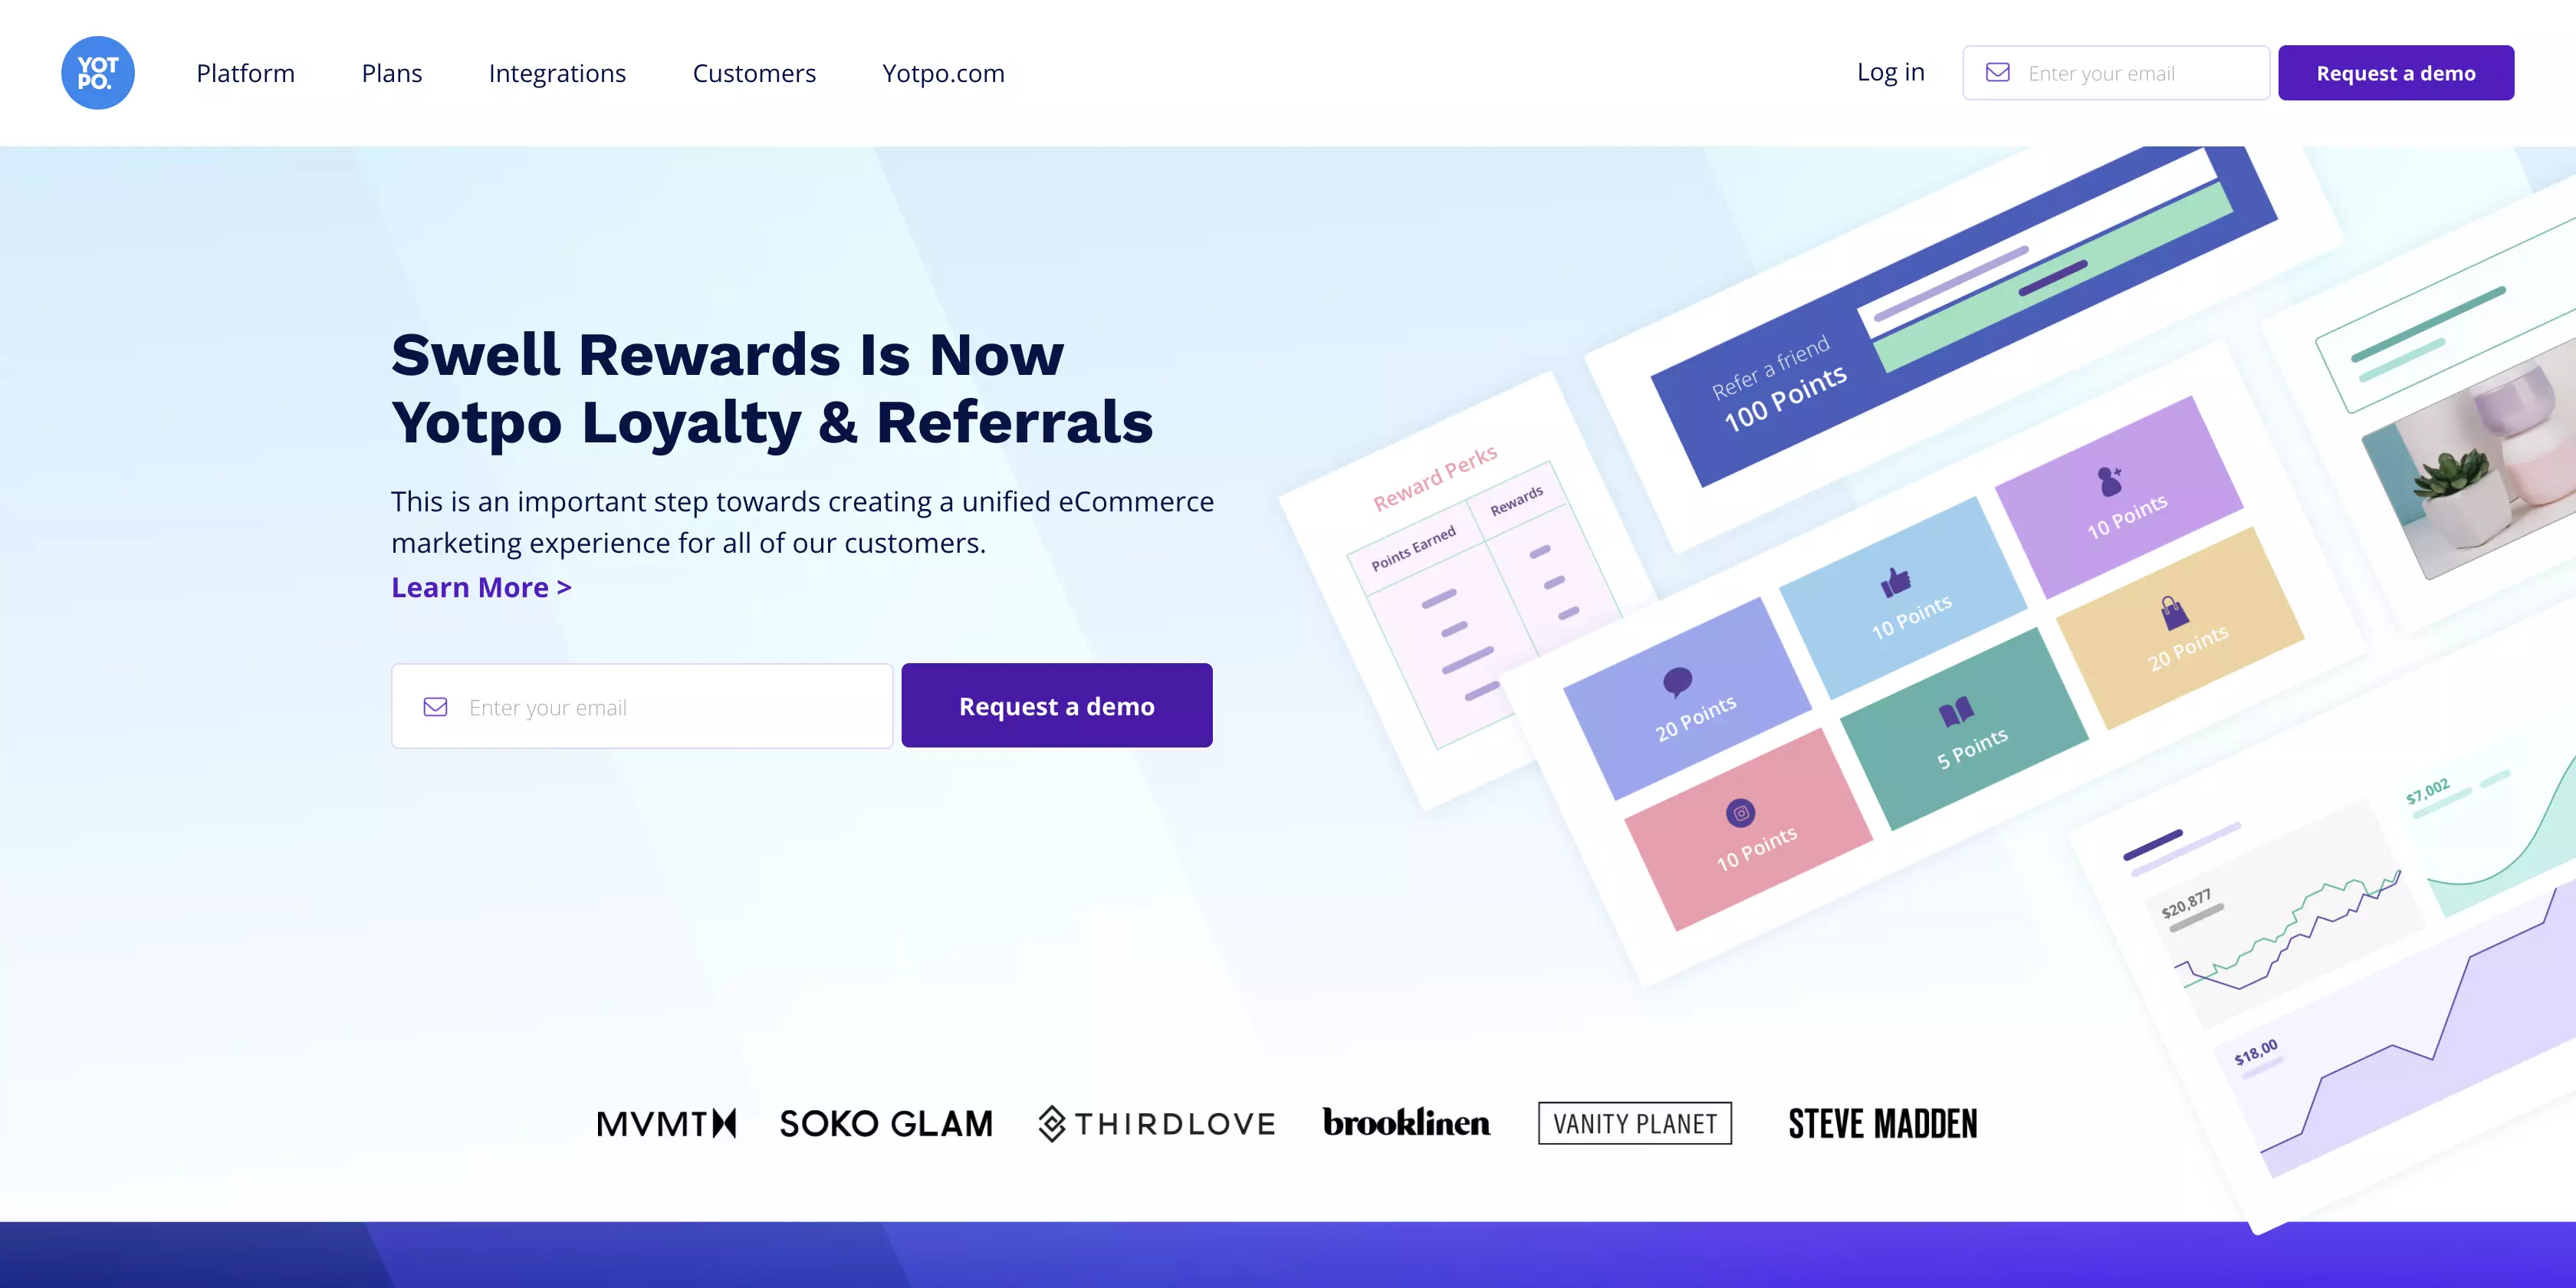 Swell Rewards loyalty and referral platform